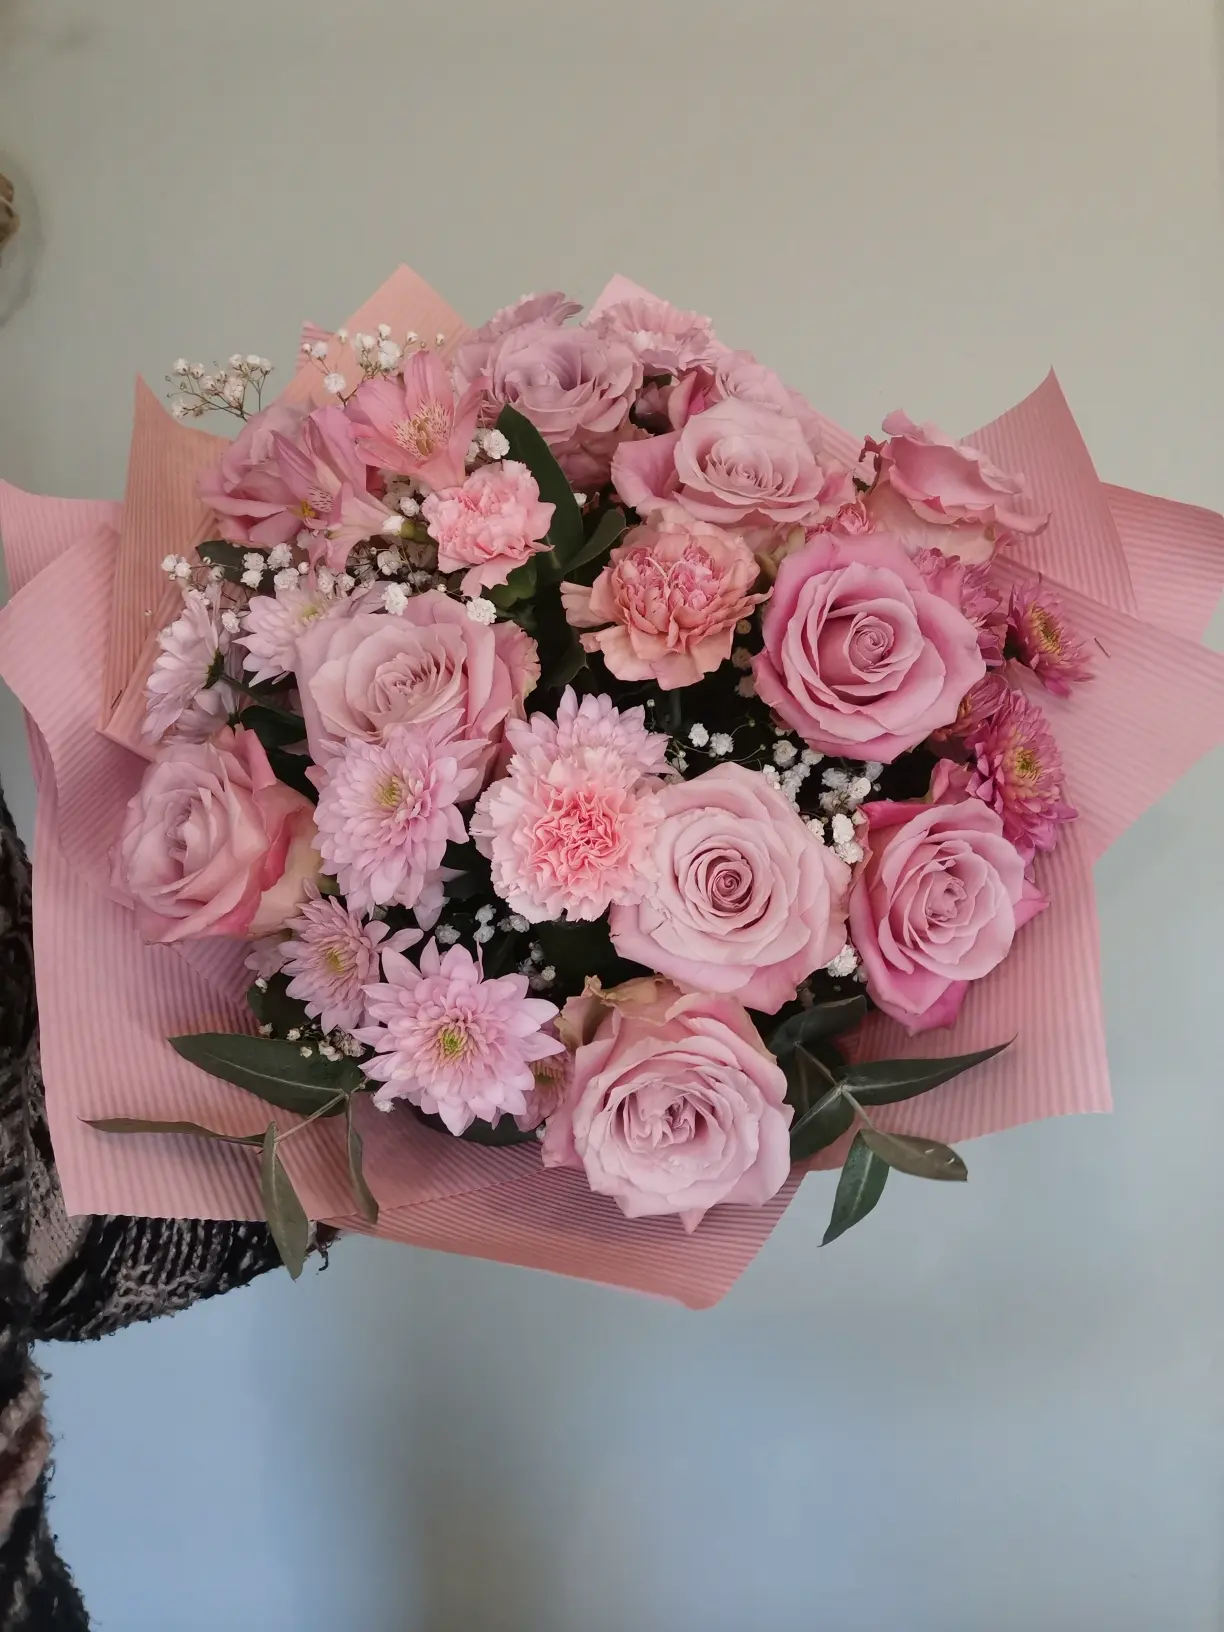 A bouquet of pastel roses is a delicate and romantic flower arrangement.